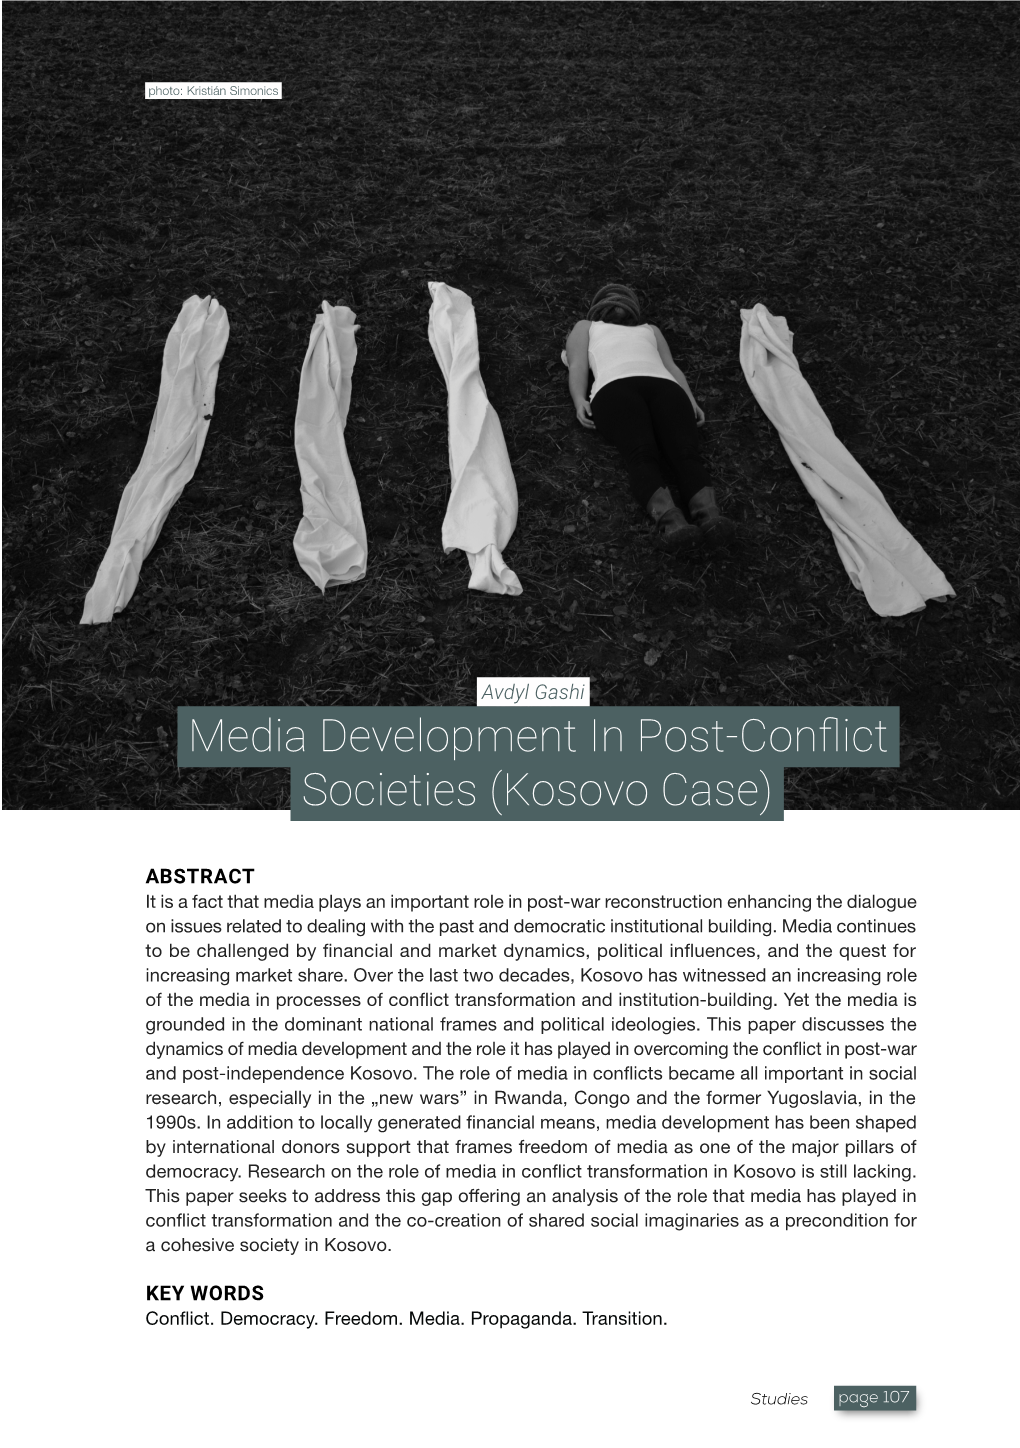 Media Development in Post-Conflict Societies (Kosovo Case)